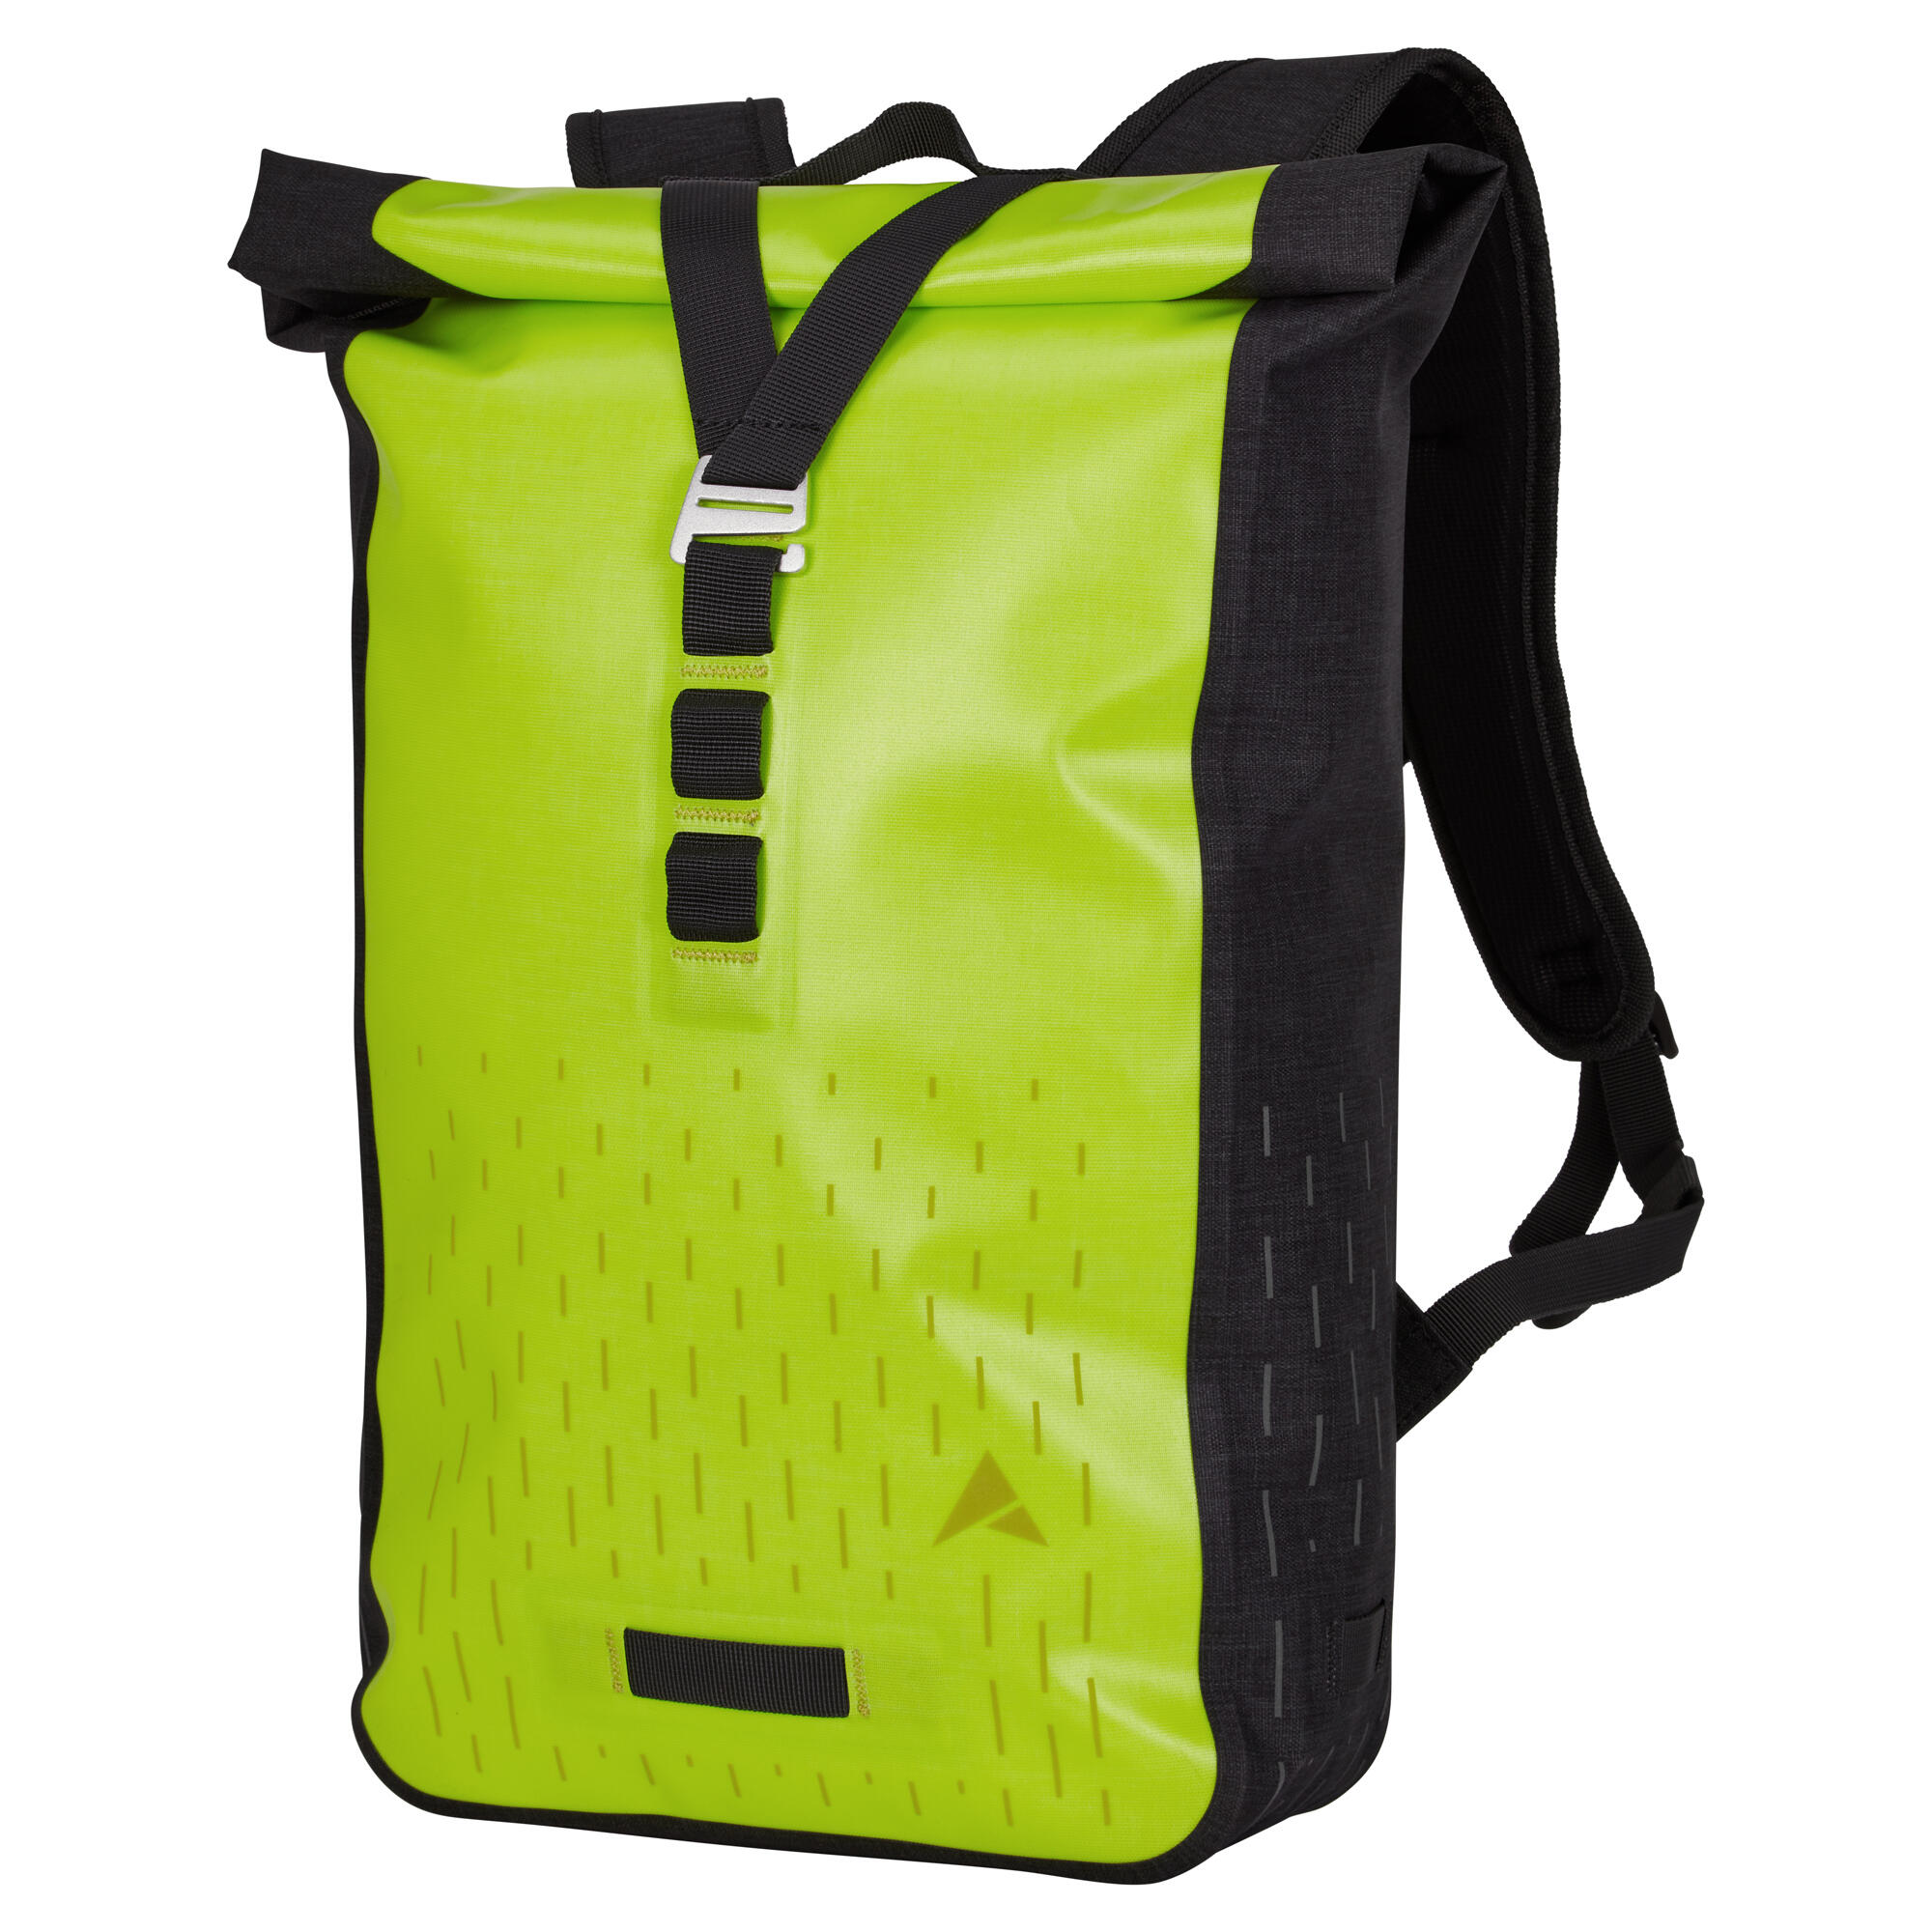 Thunderstorm City 20 Backpack Hi-Viz Yellow 20L Waterproof 1/7